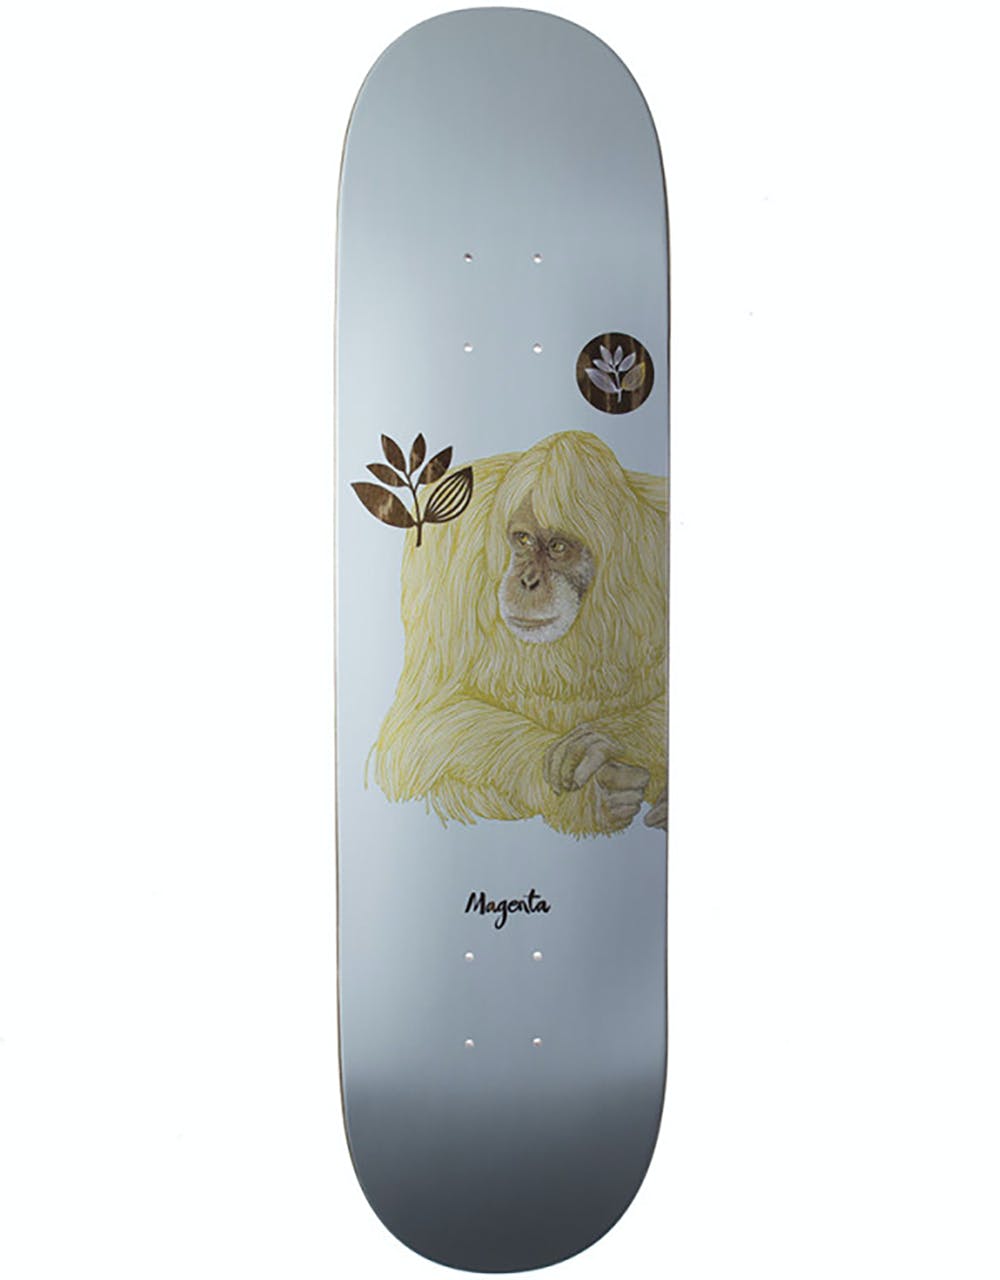 Magenta Monkey Skateboard Deck - 8.125"